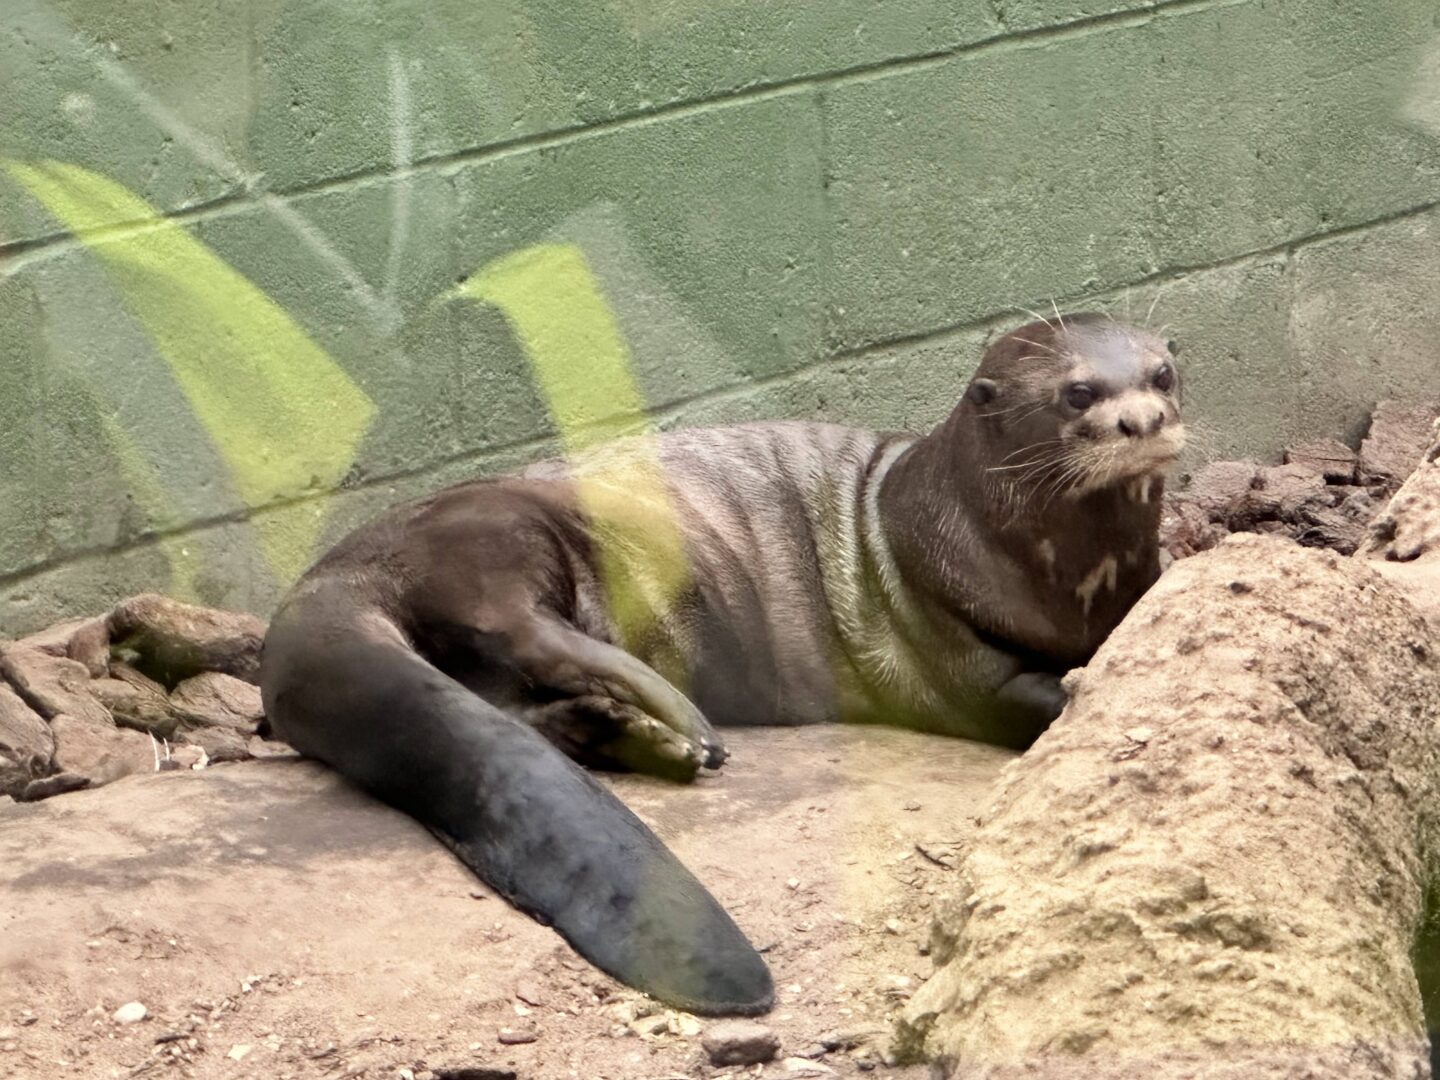 large otter sits on a sandy ledge